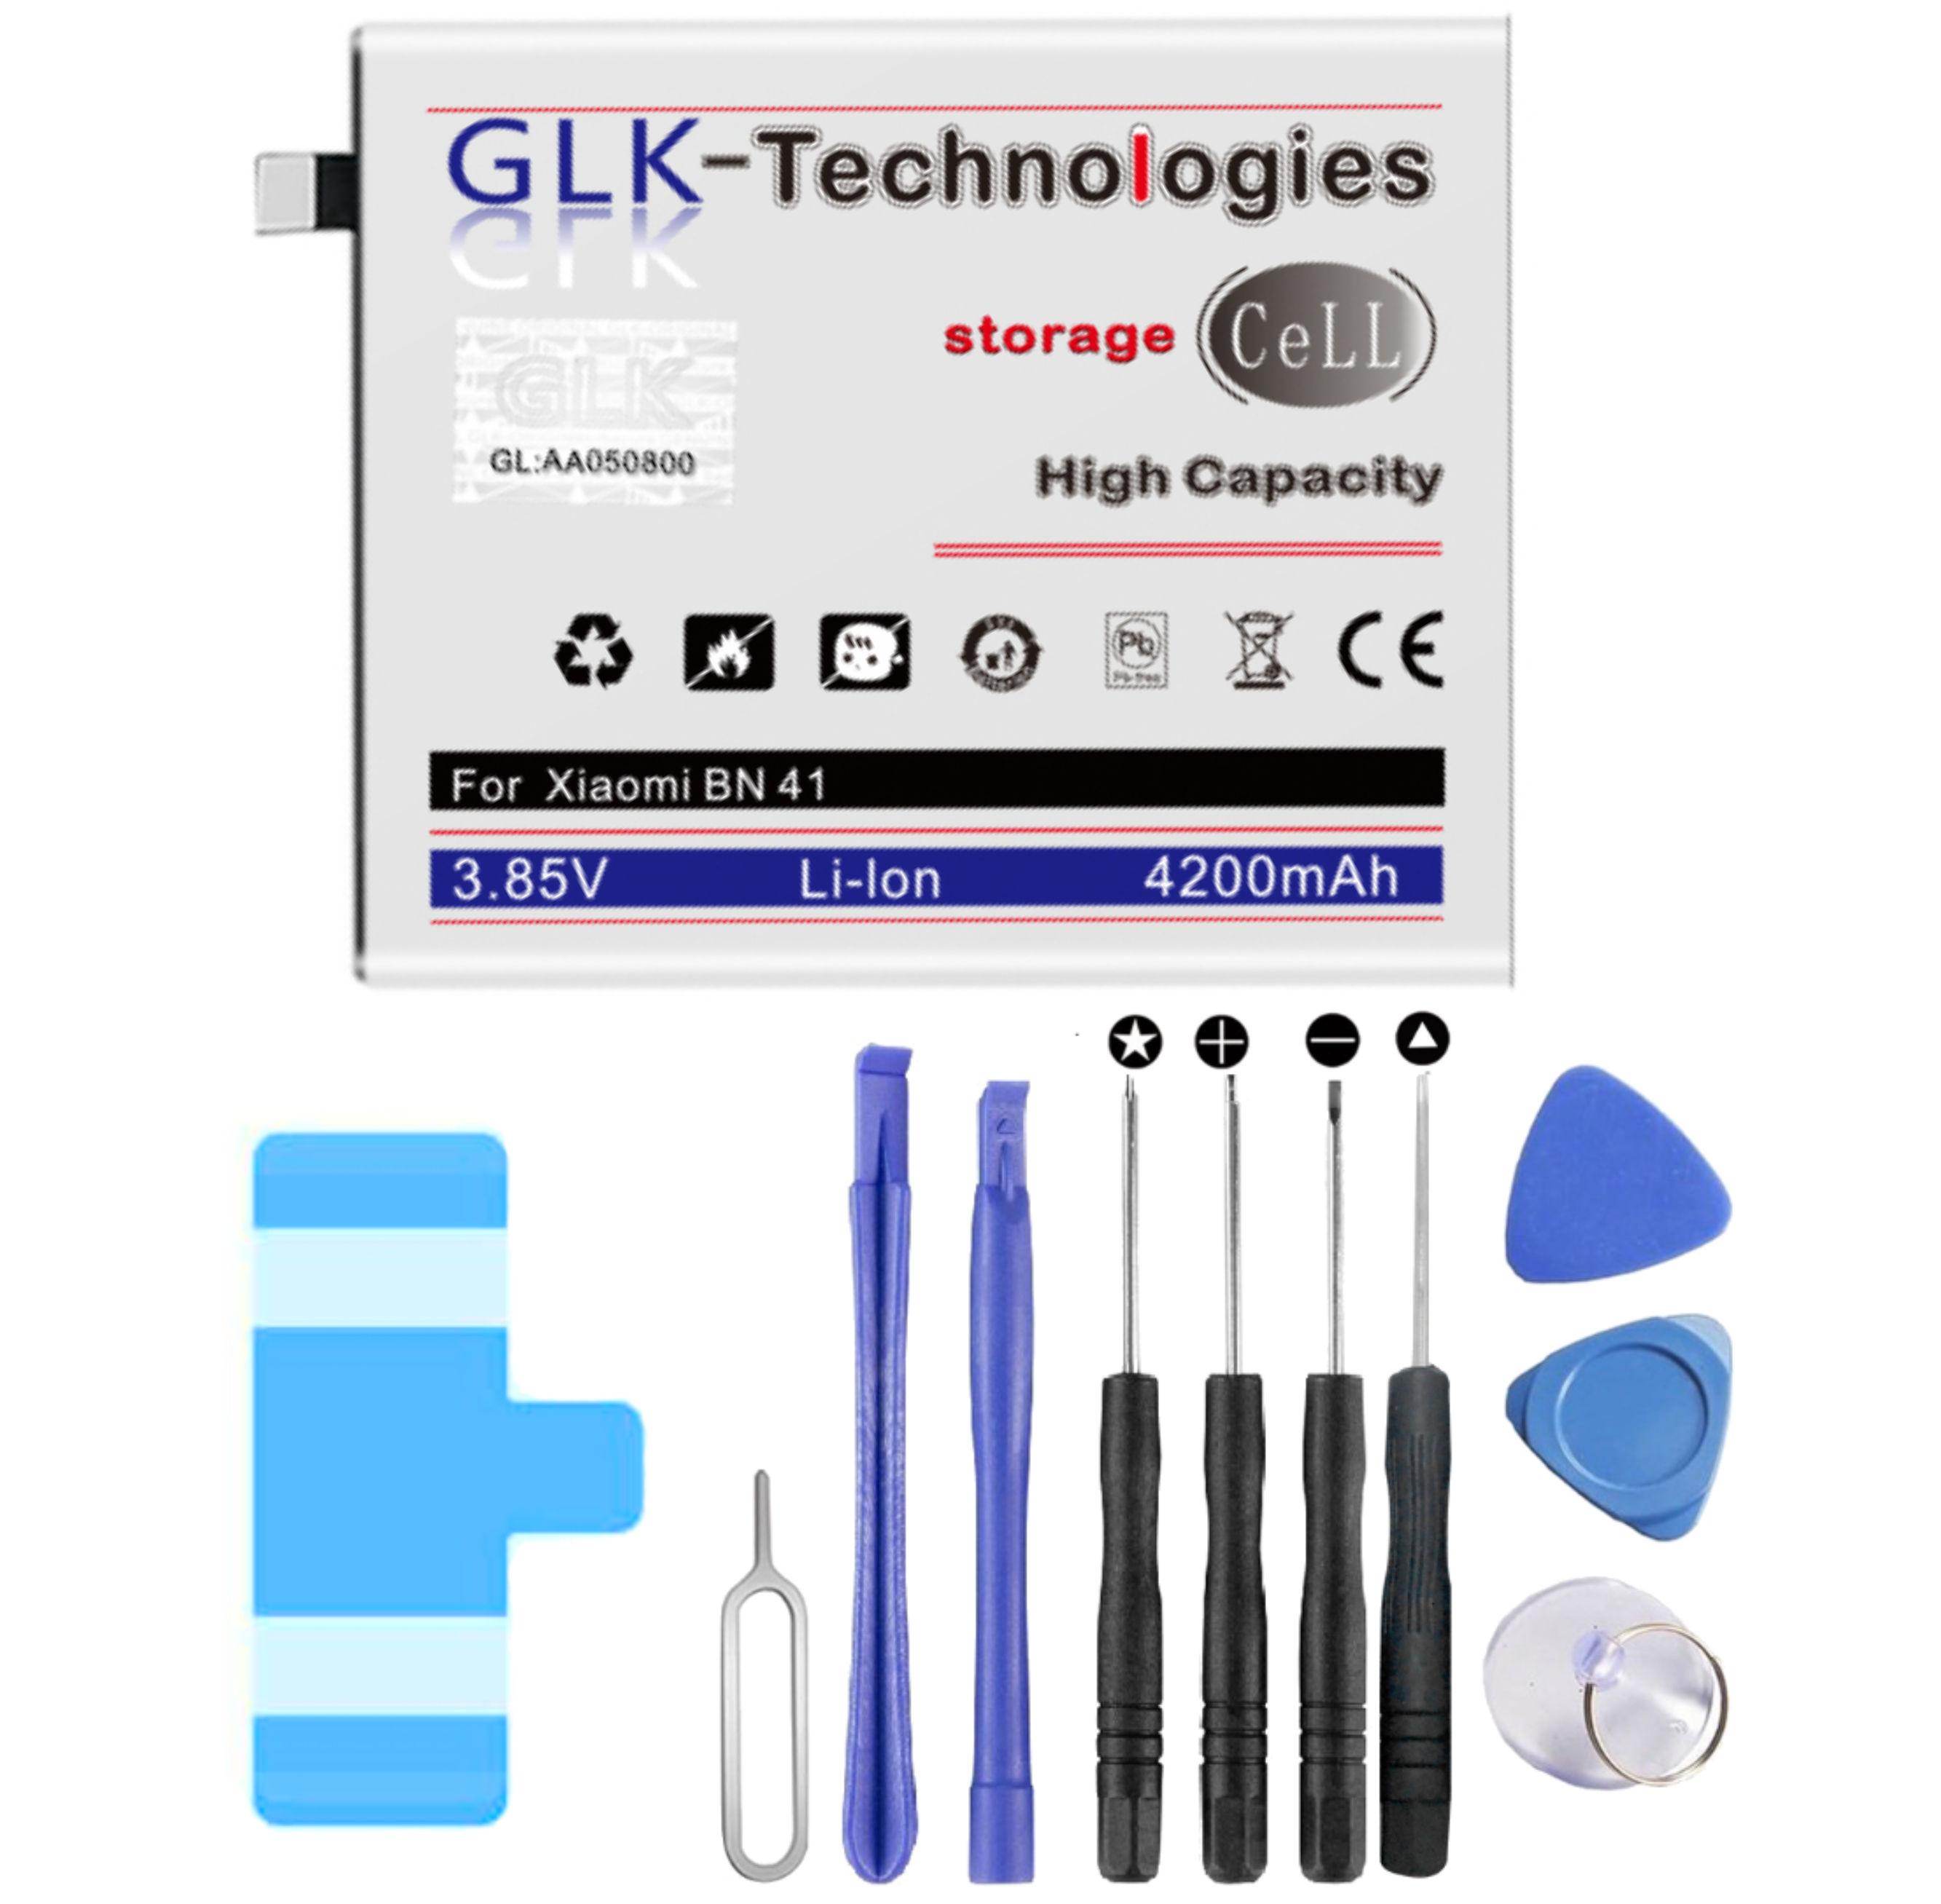 GLK-TECHNOLOGIES High Power Ersatz Akku inkl. Werkzeug Redmi 4 Smartphone Akku Xiaomi mAh Battery 4280 Li-Ion Ersatz für BN41 Note